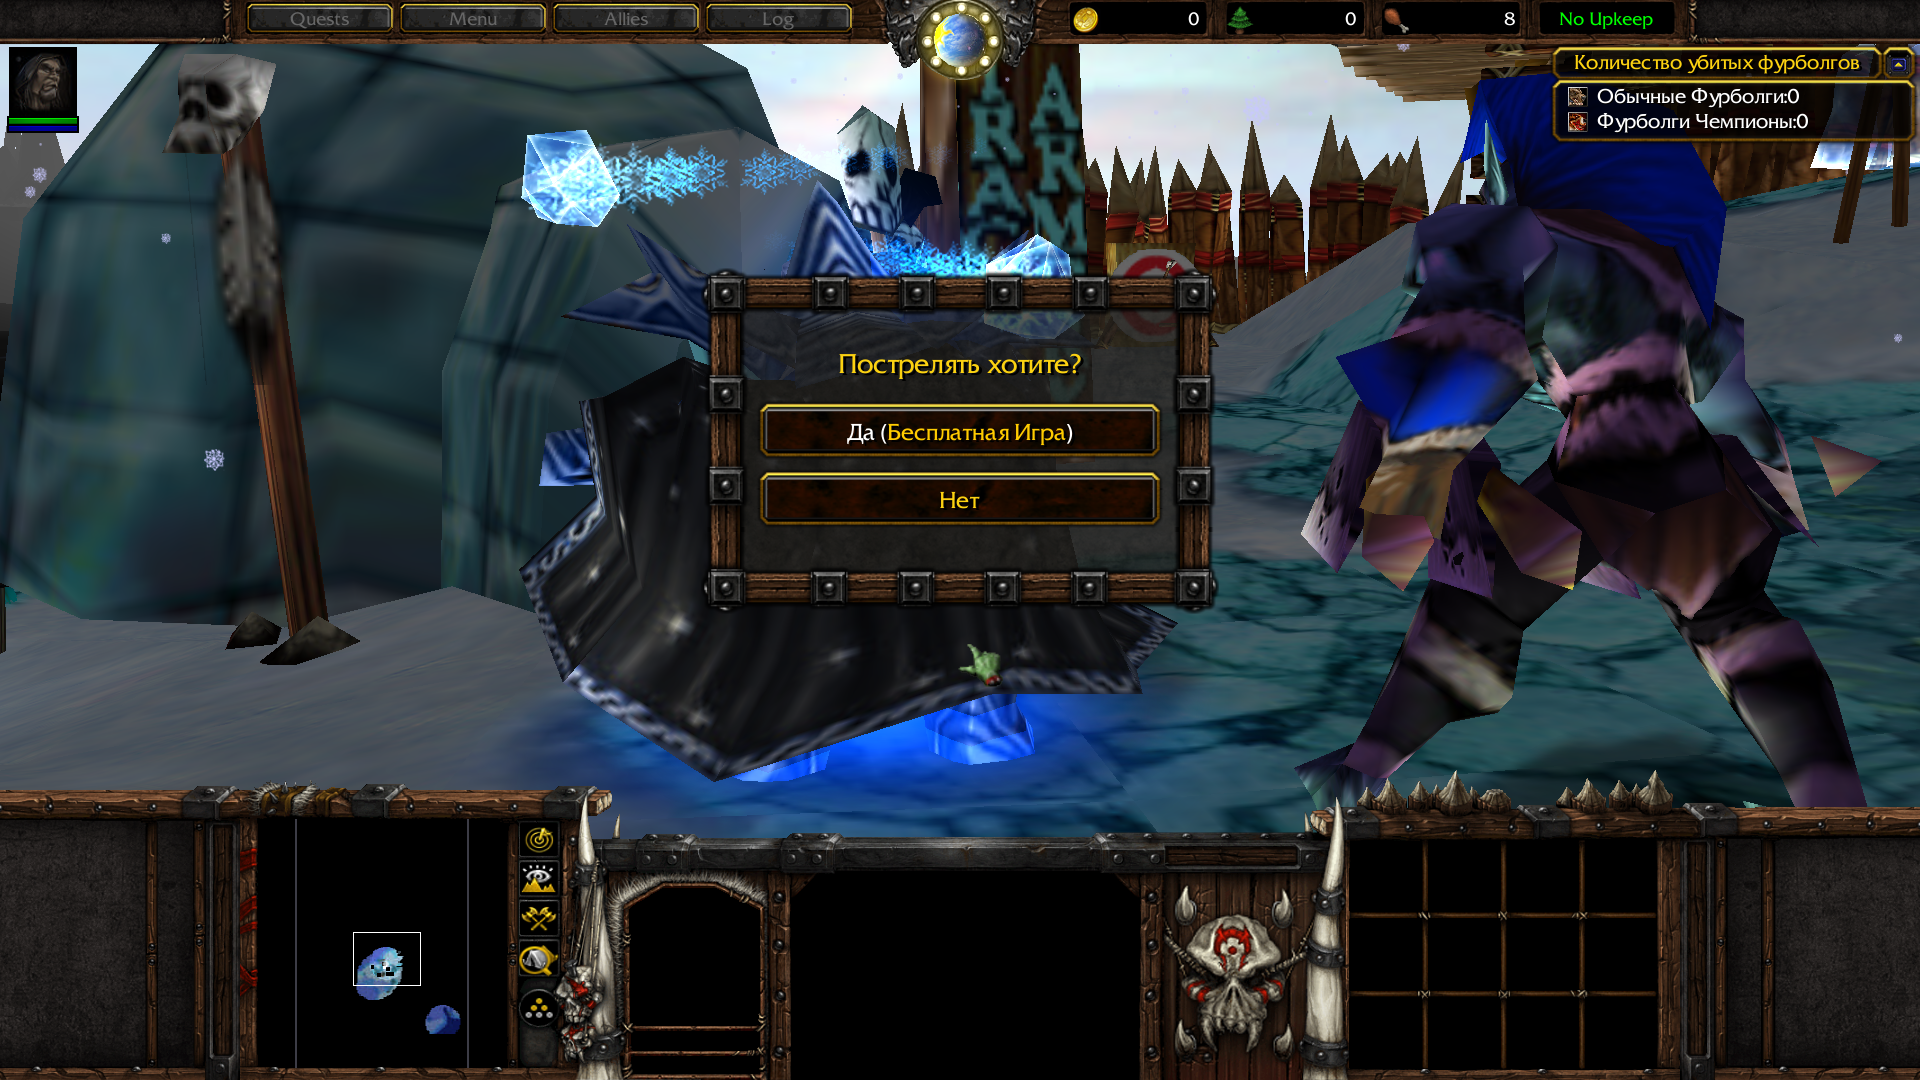 Сфера льда Warcraft 3. Фурболги варкрафт 3. Варкрафт 3 цвета игроков. Диалоговое окно варкрафт 3.